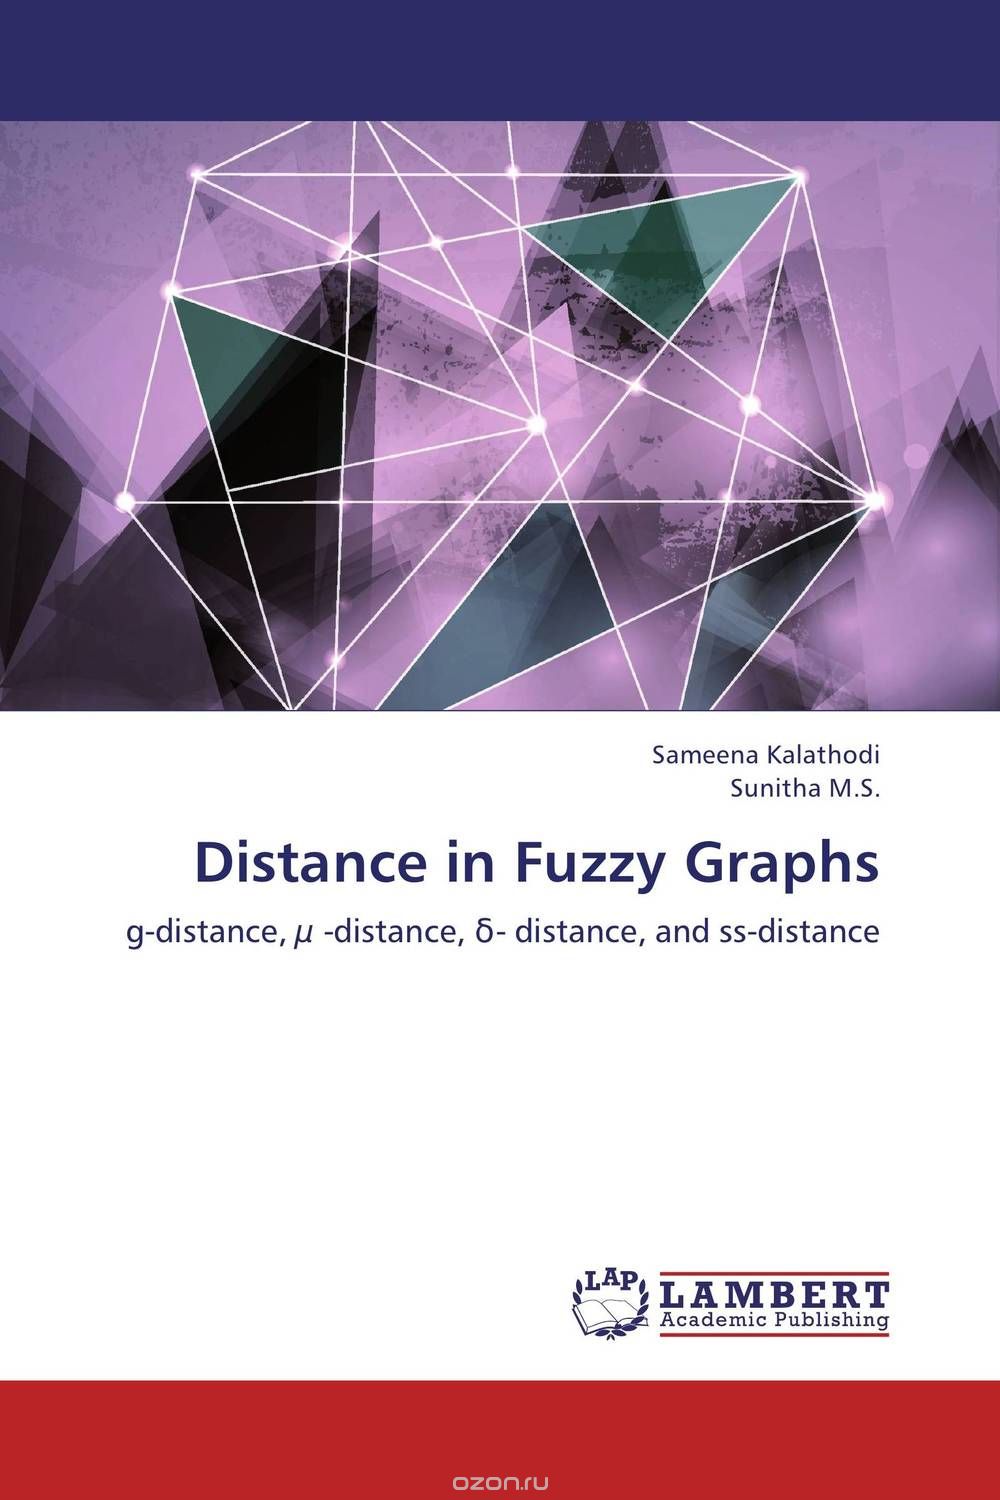 Distance in Fuzzy Graphs